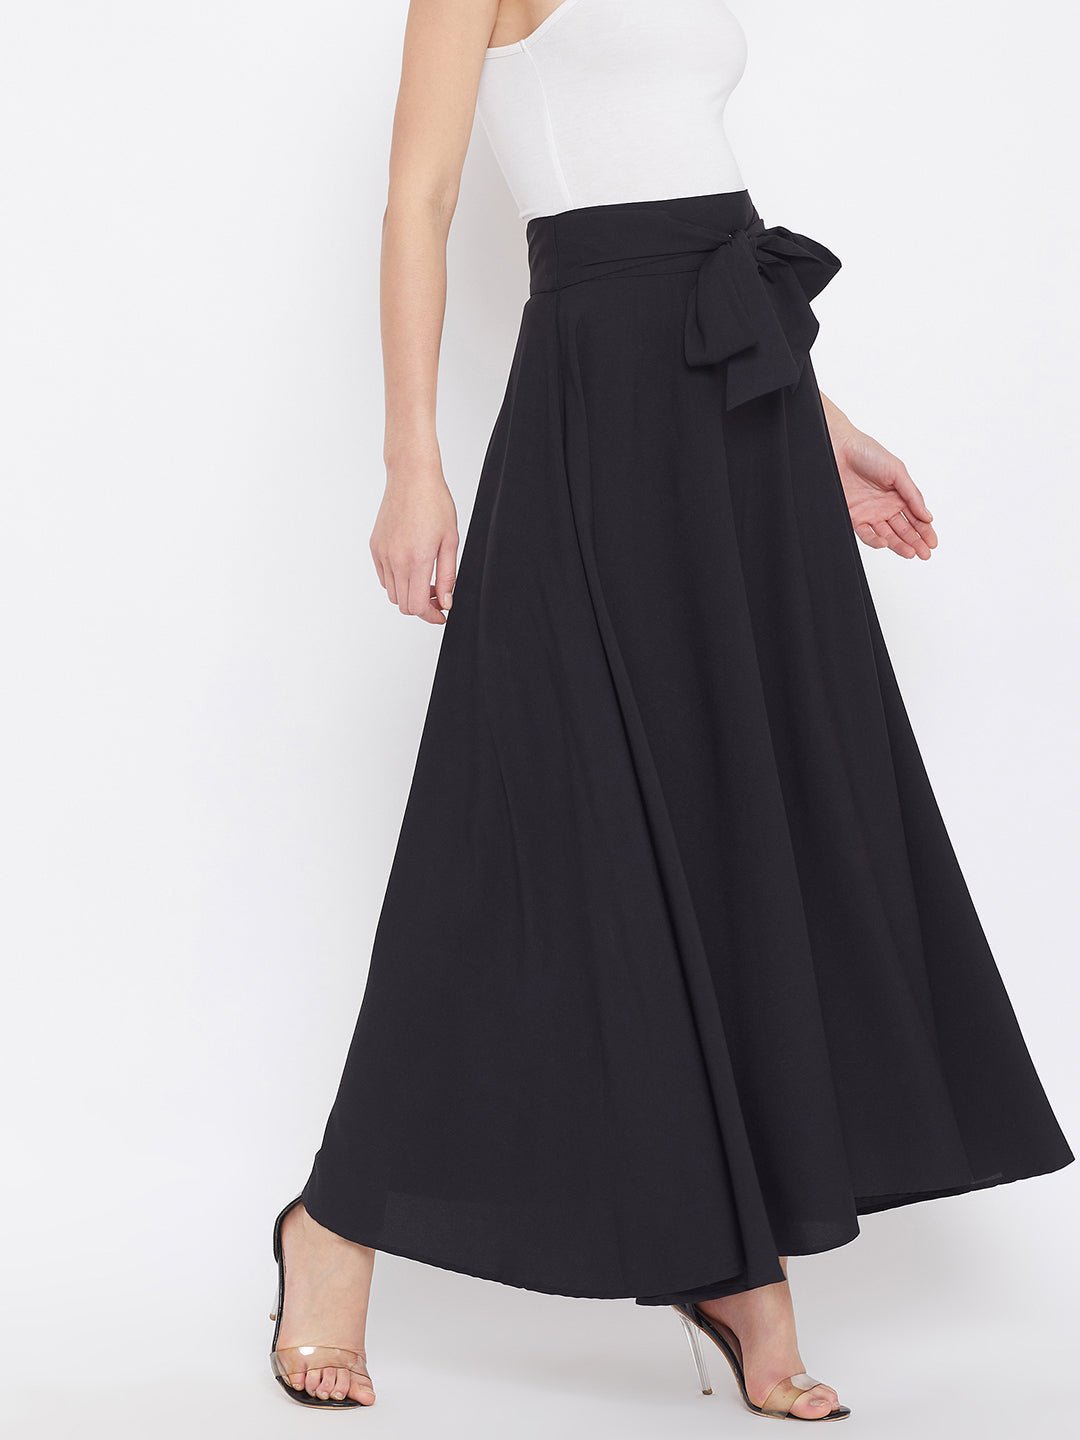 Folk Republic Women Solid Black Bow-Tie High-Waist Maxi Skirt - #folk republic#